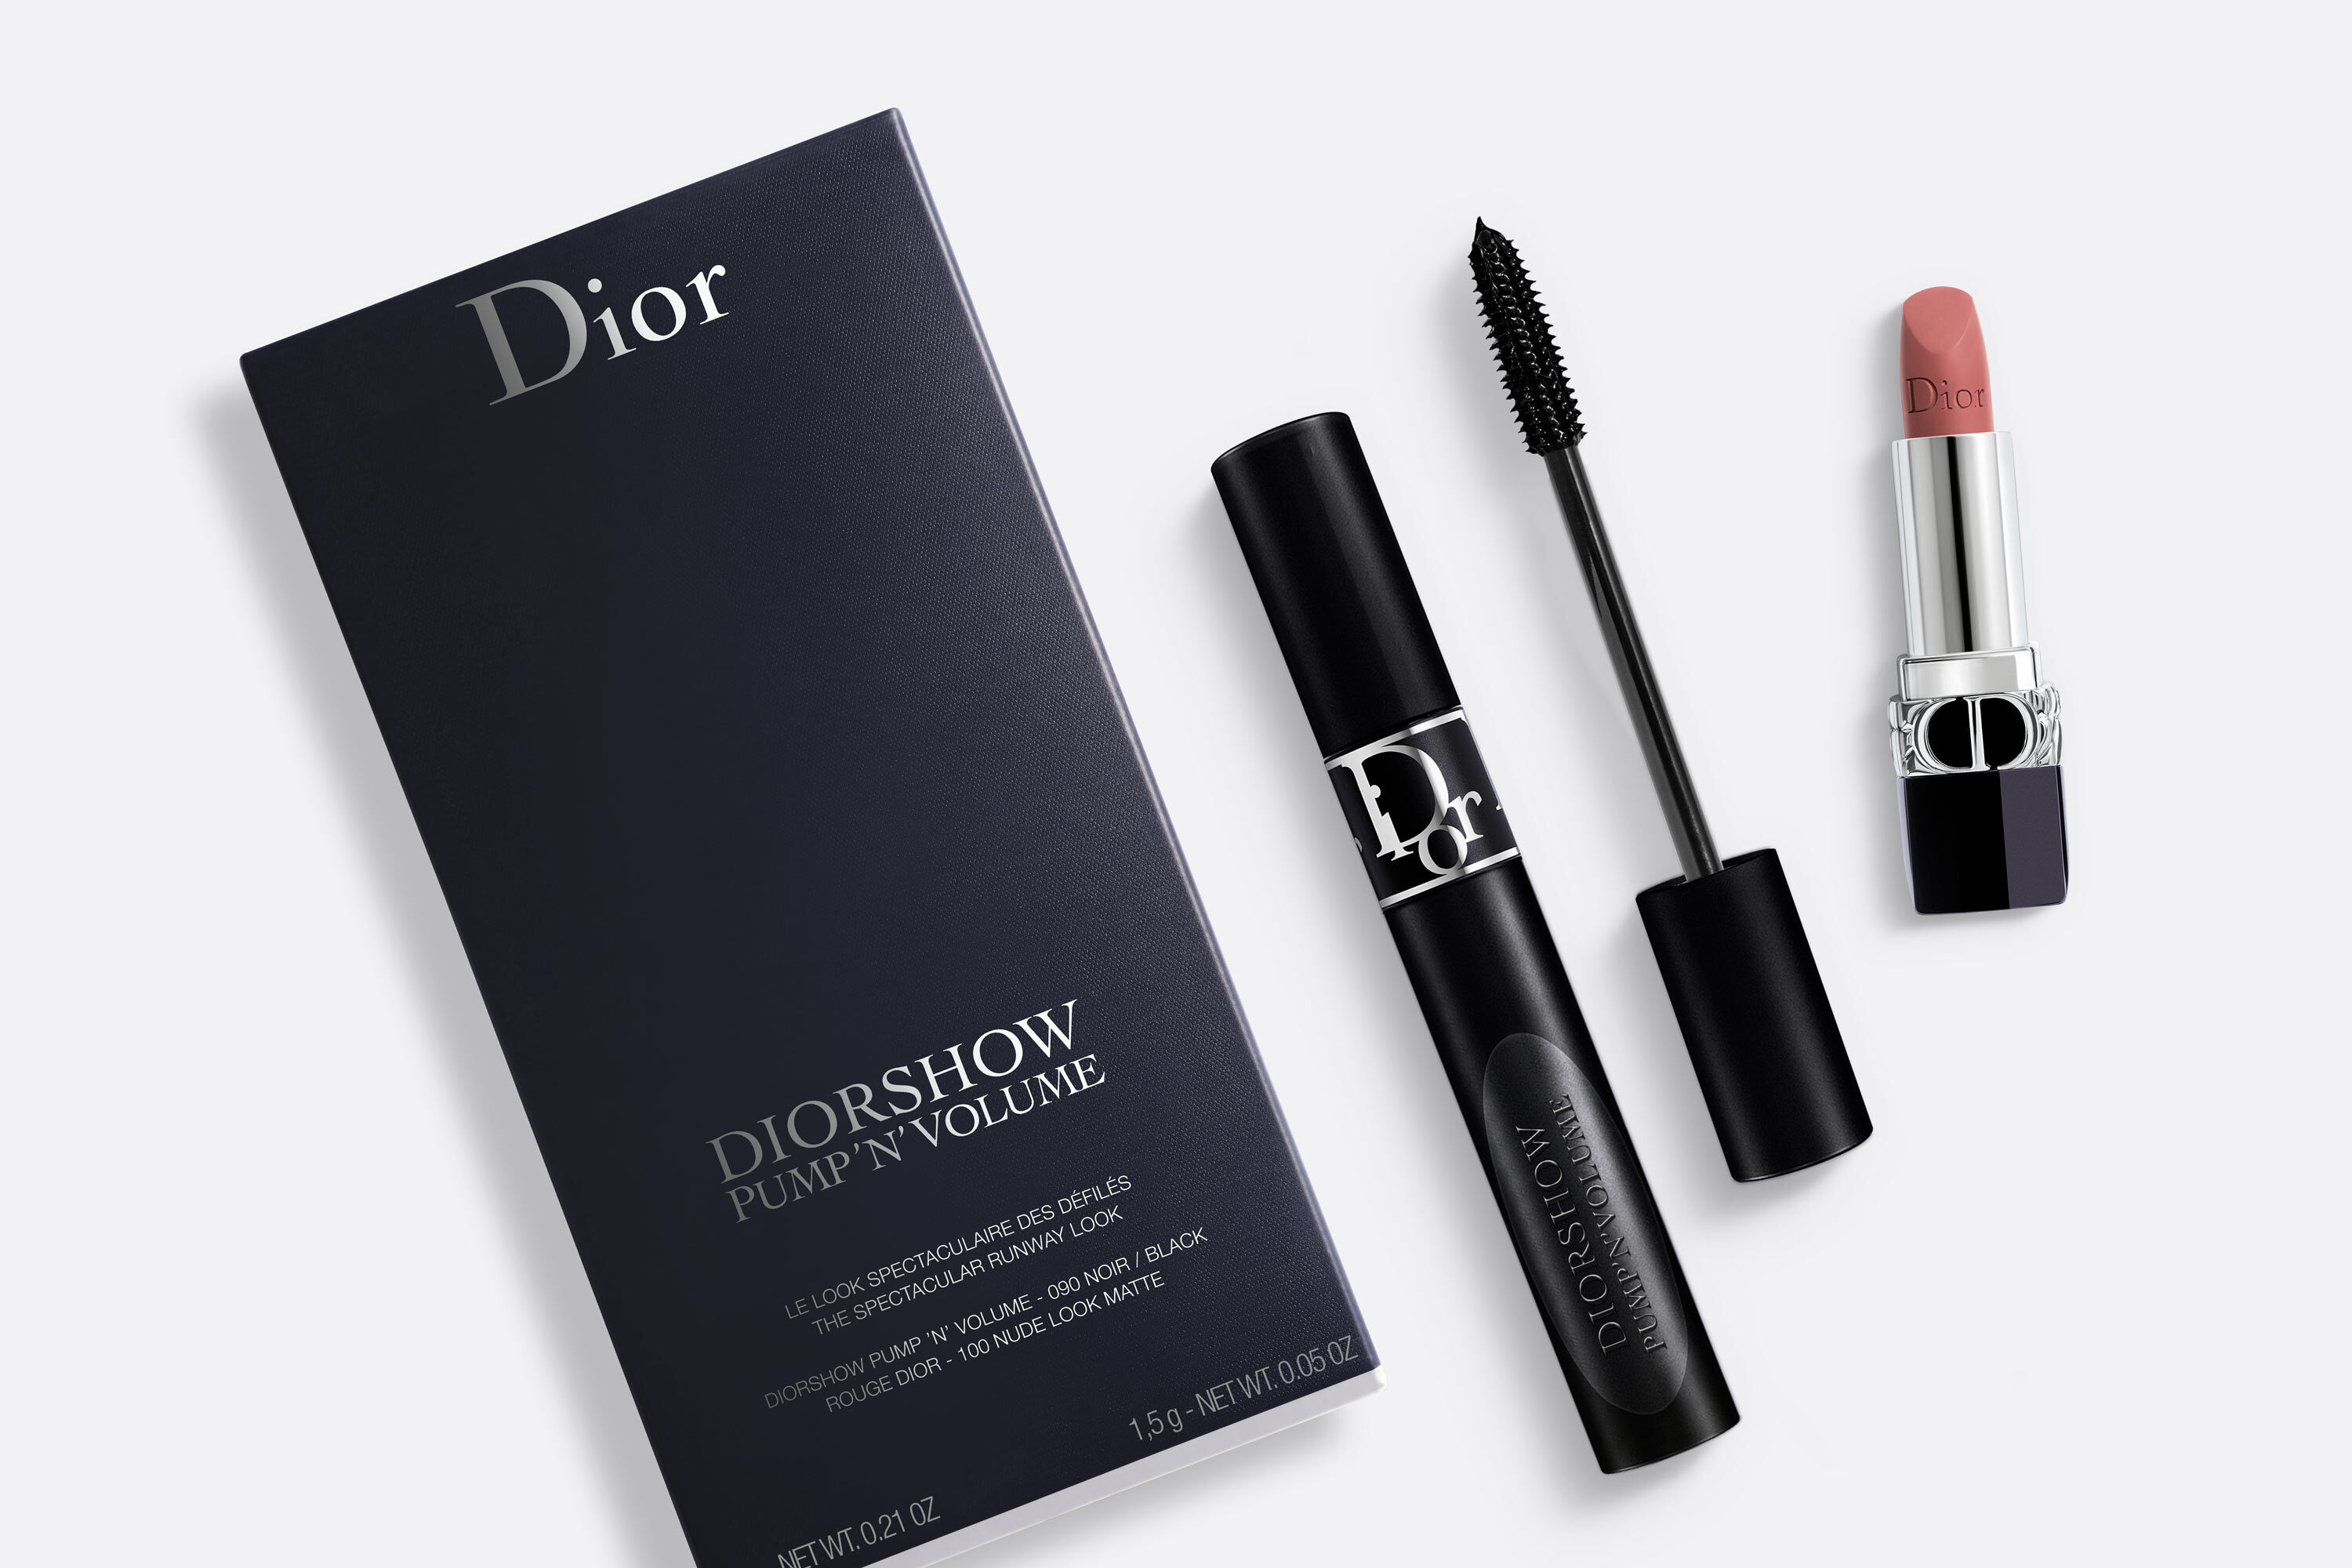 Dior Diorshow Pump N Volume Gift Set mascara6ml  lipstick15g  Set   Makeupstorecoil